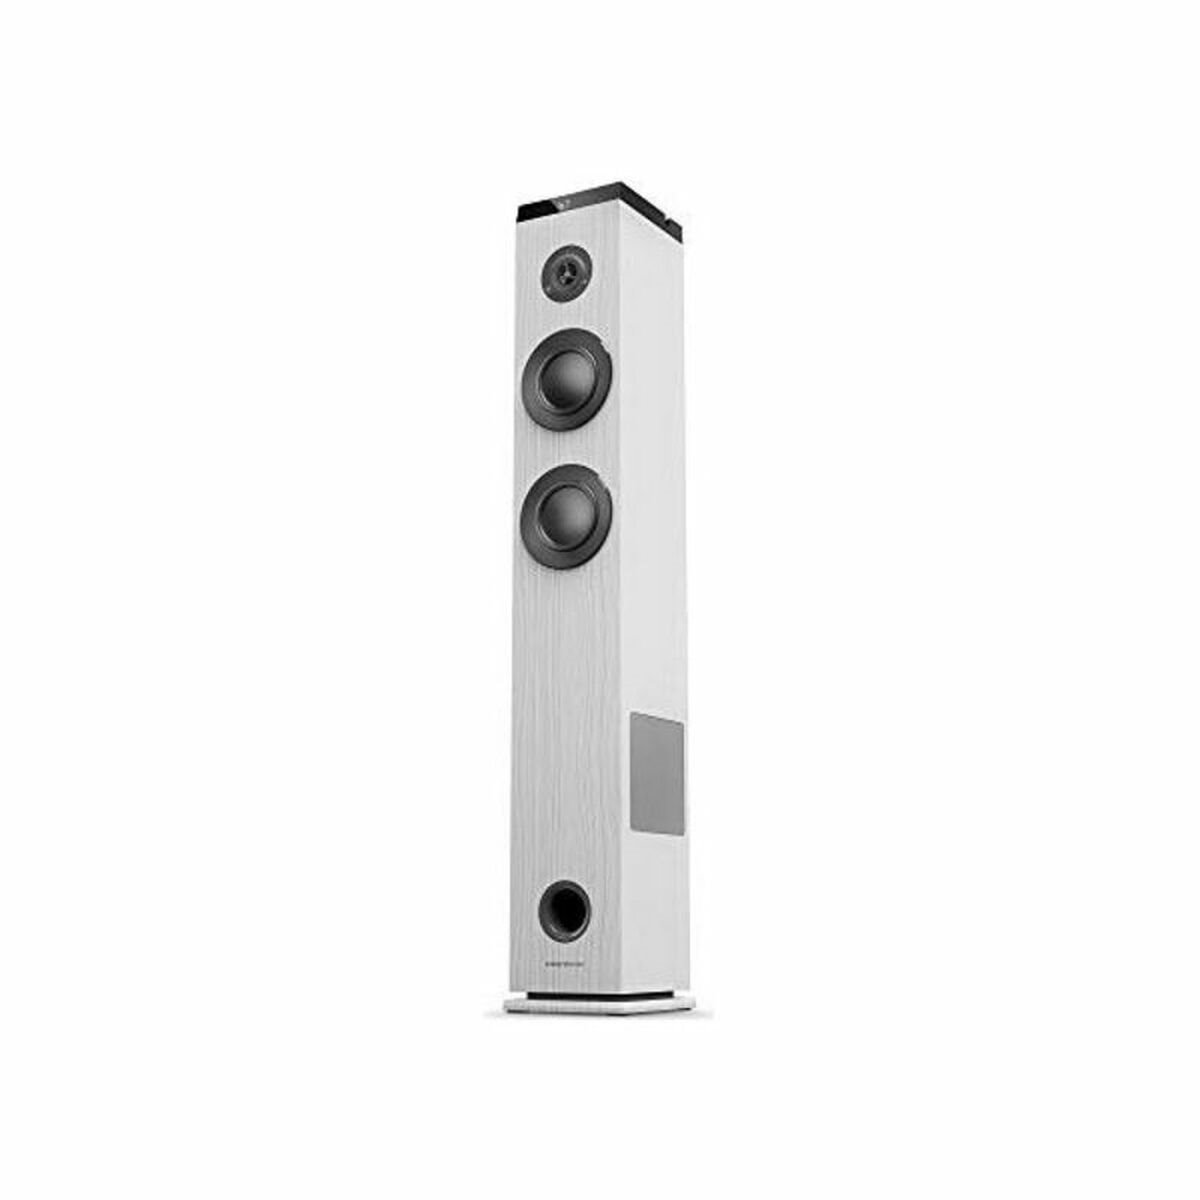 Energy Music Box 7+, el nuevo altavoz Bluetooth de Energy Sistem